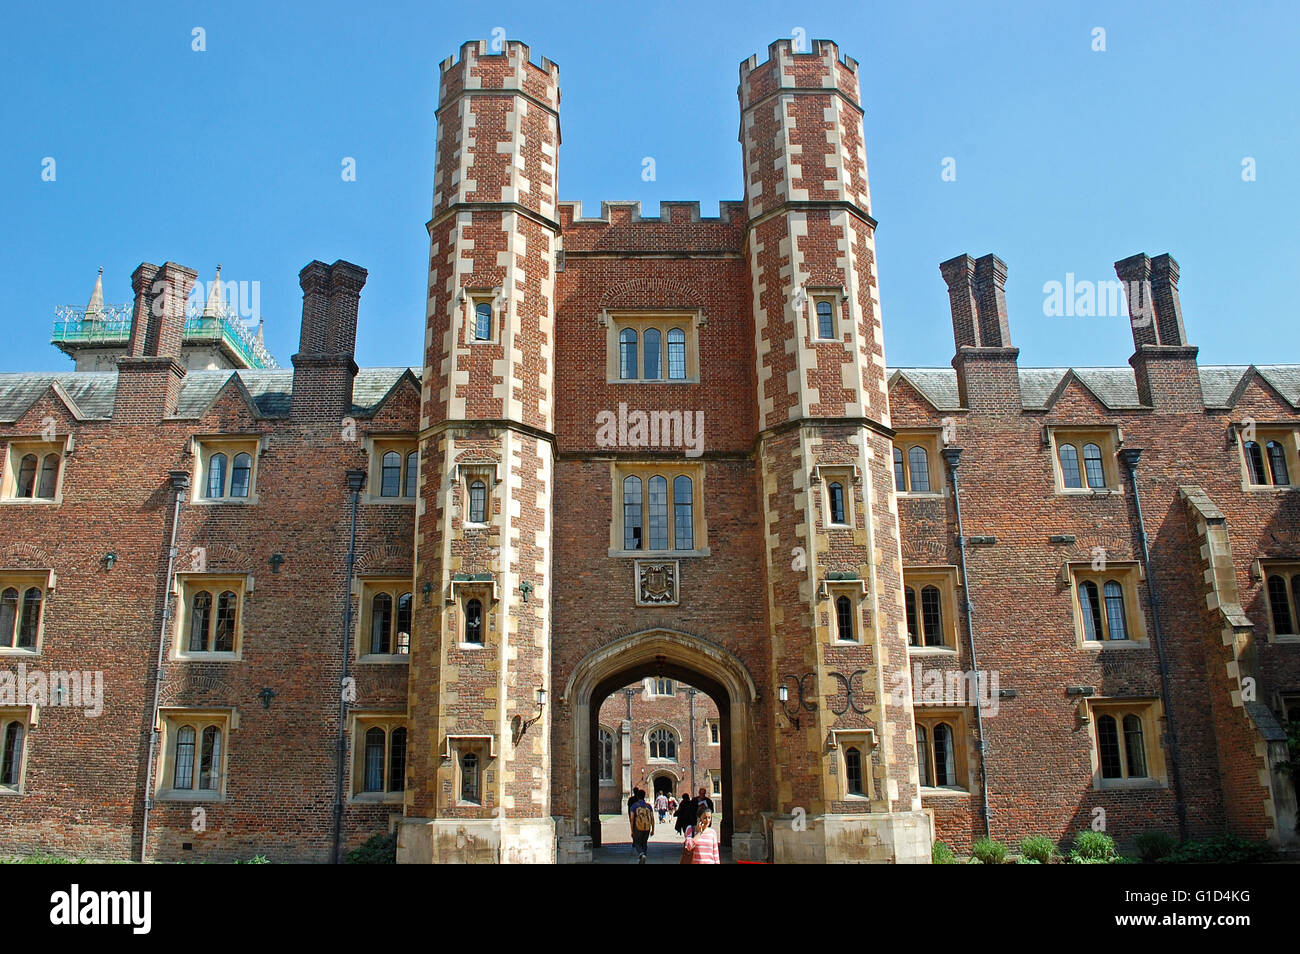 Entrance to St John's College, Cambridge University Stock Photo